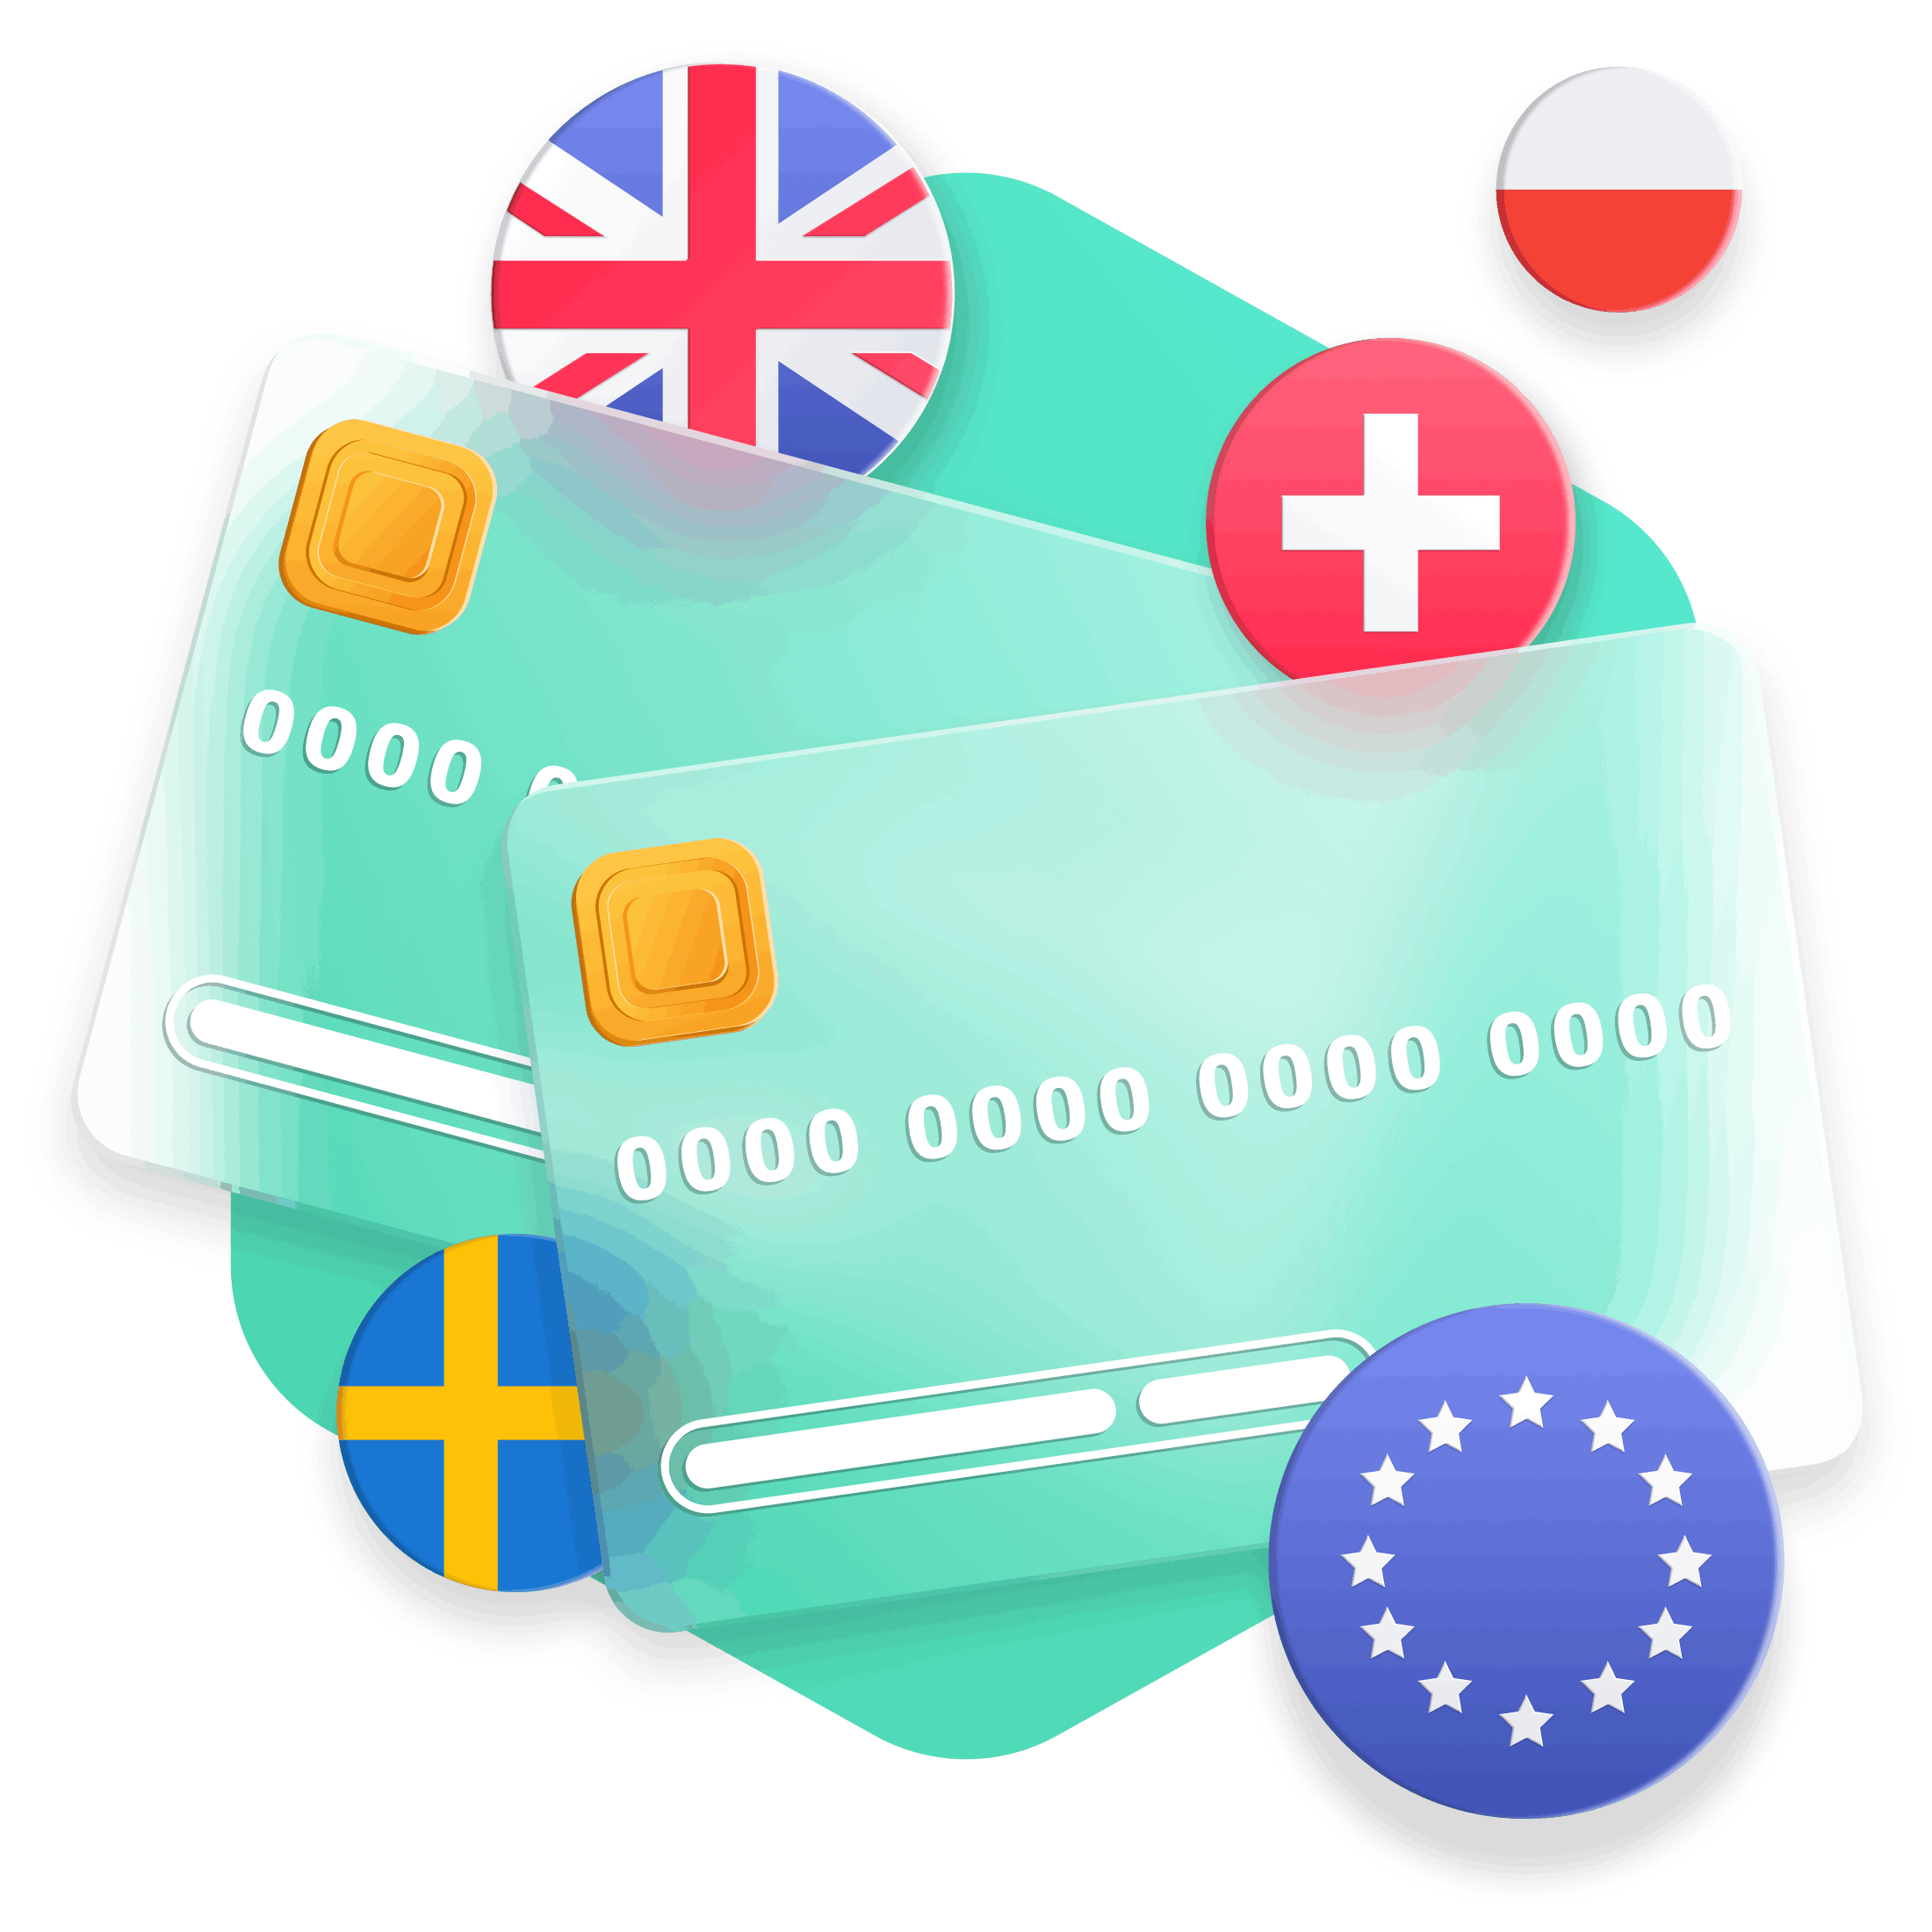 SwissBorg card deposit